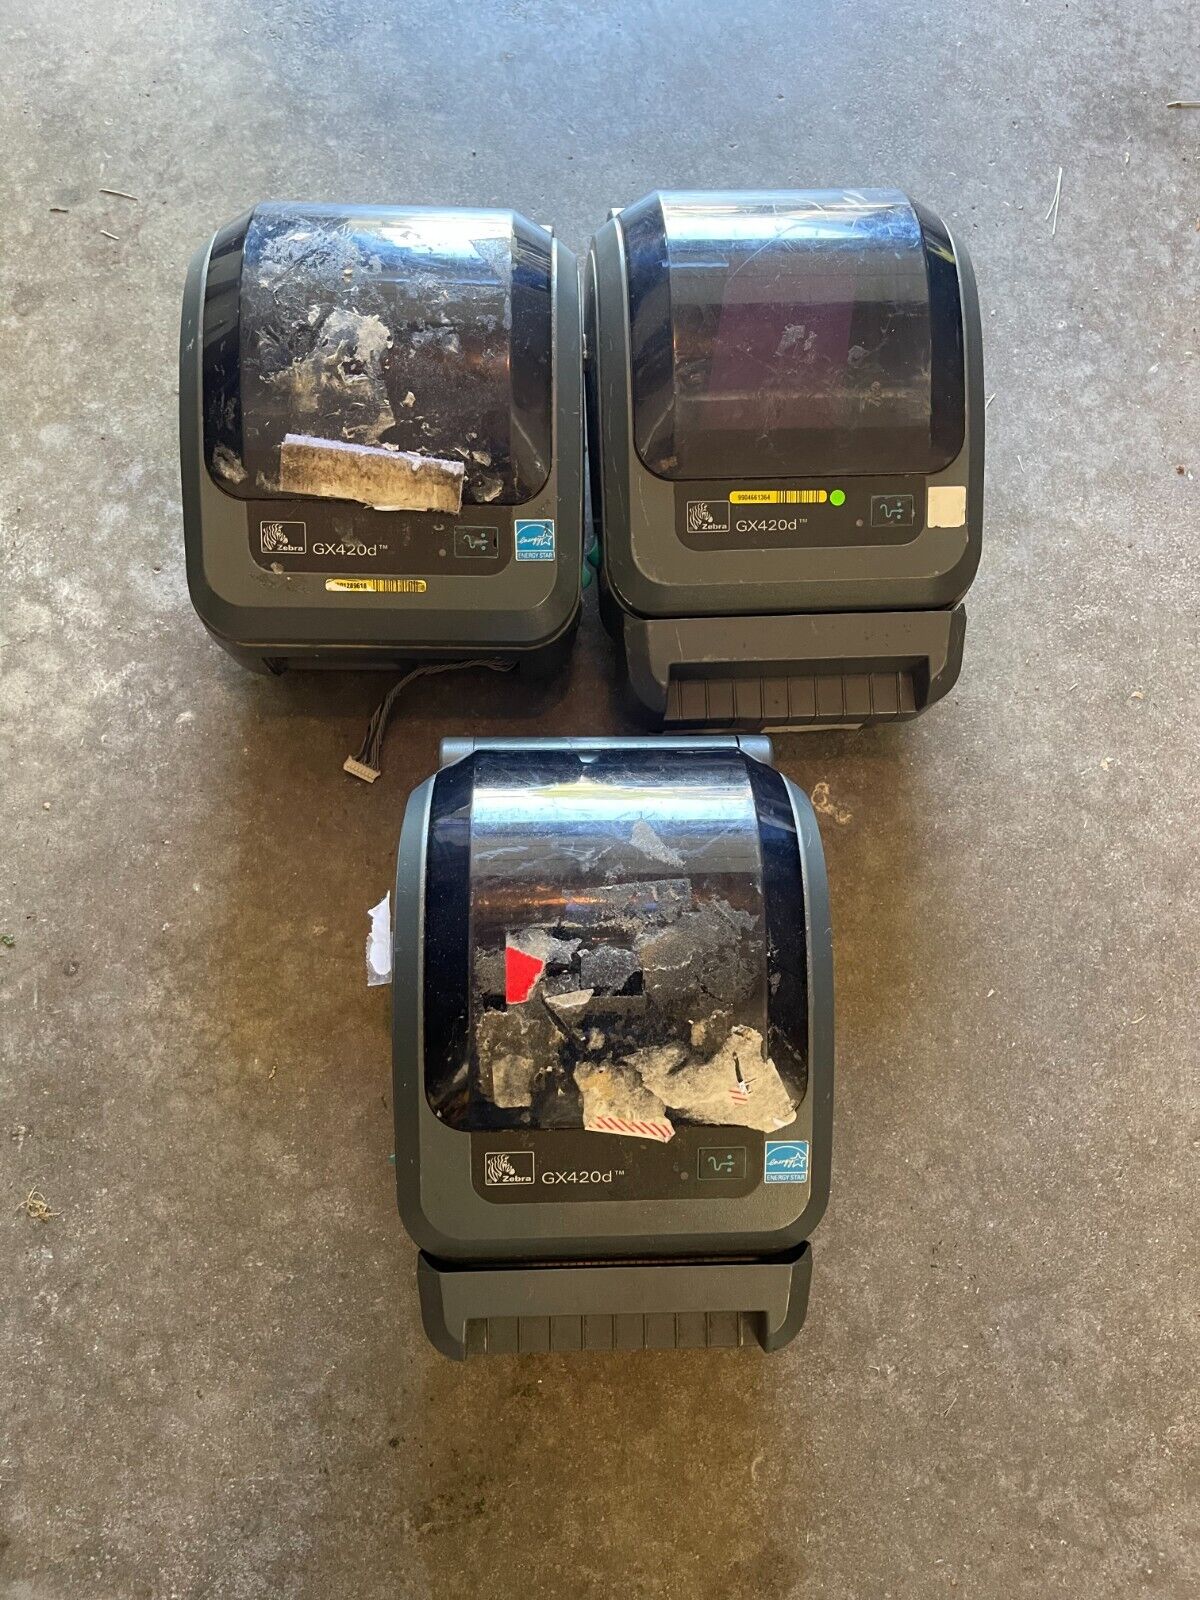 Lot of 3 Zebra Printers GX420d - As Is